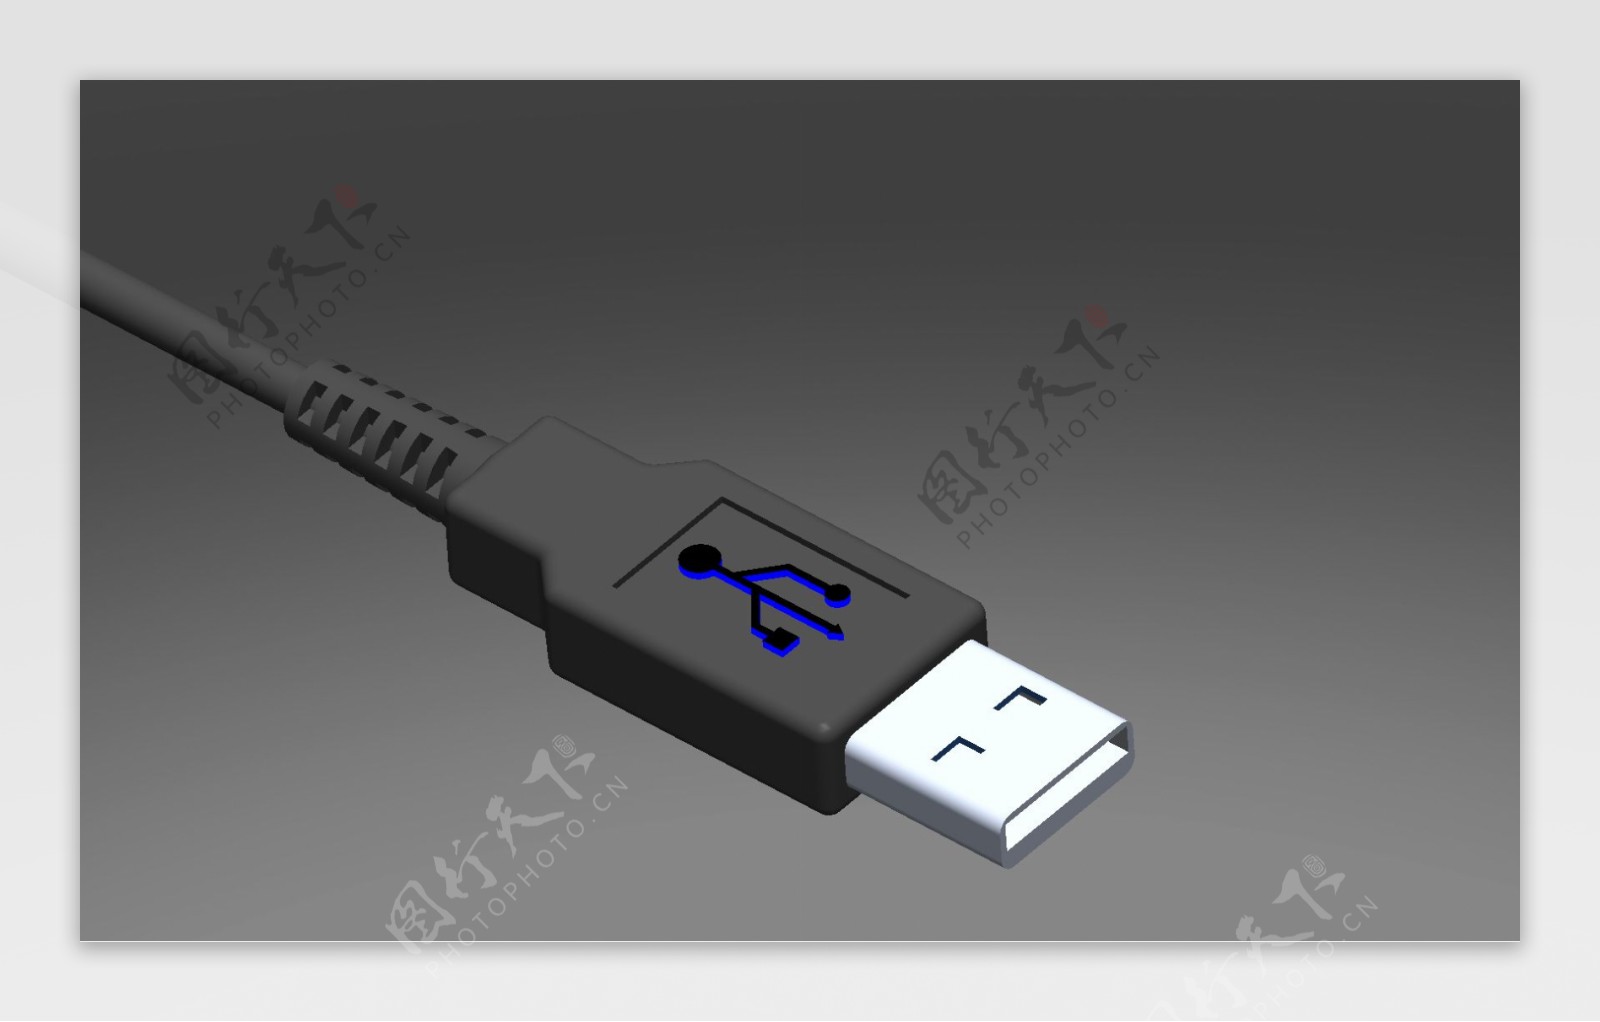 USB线